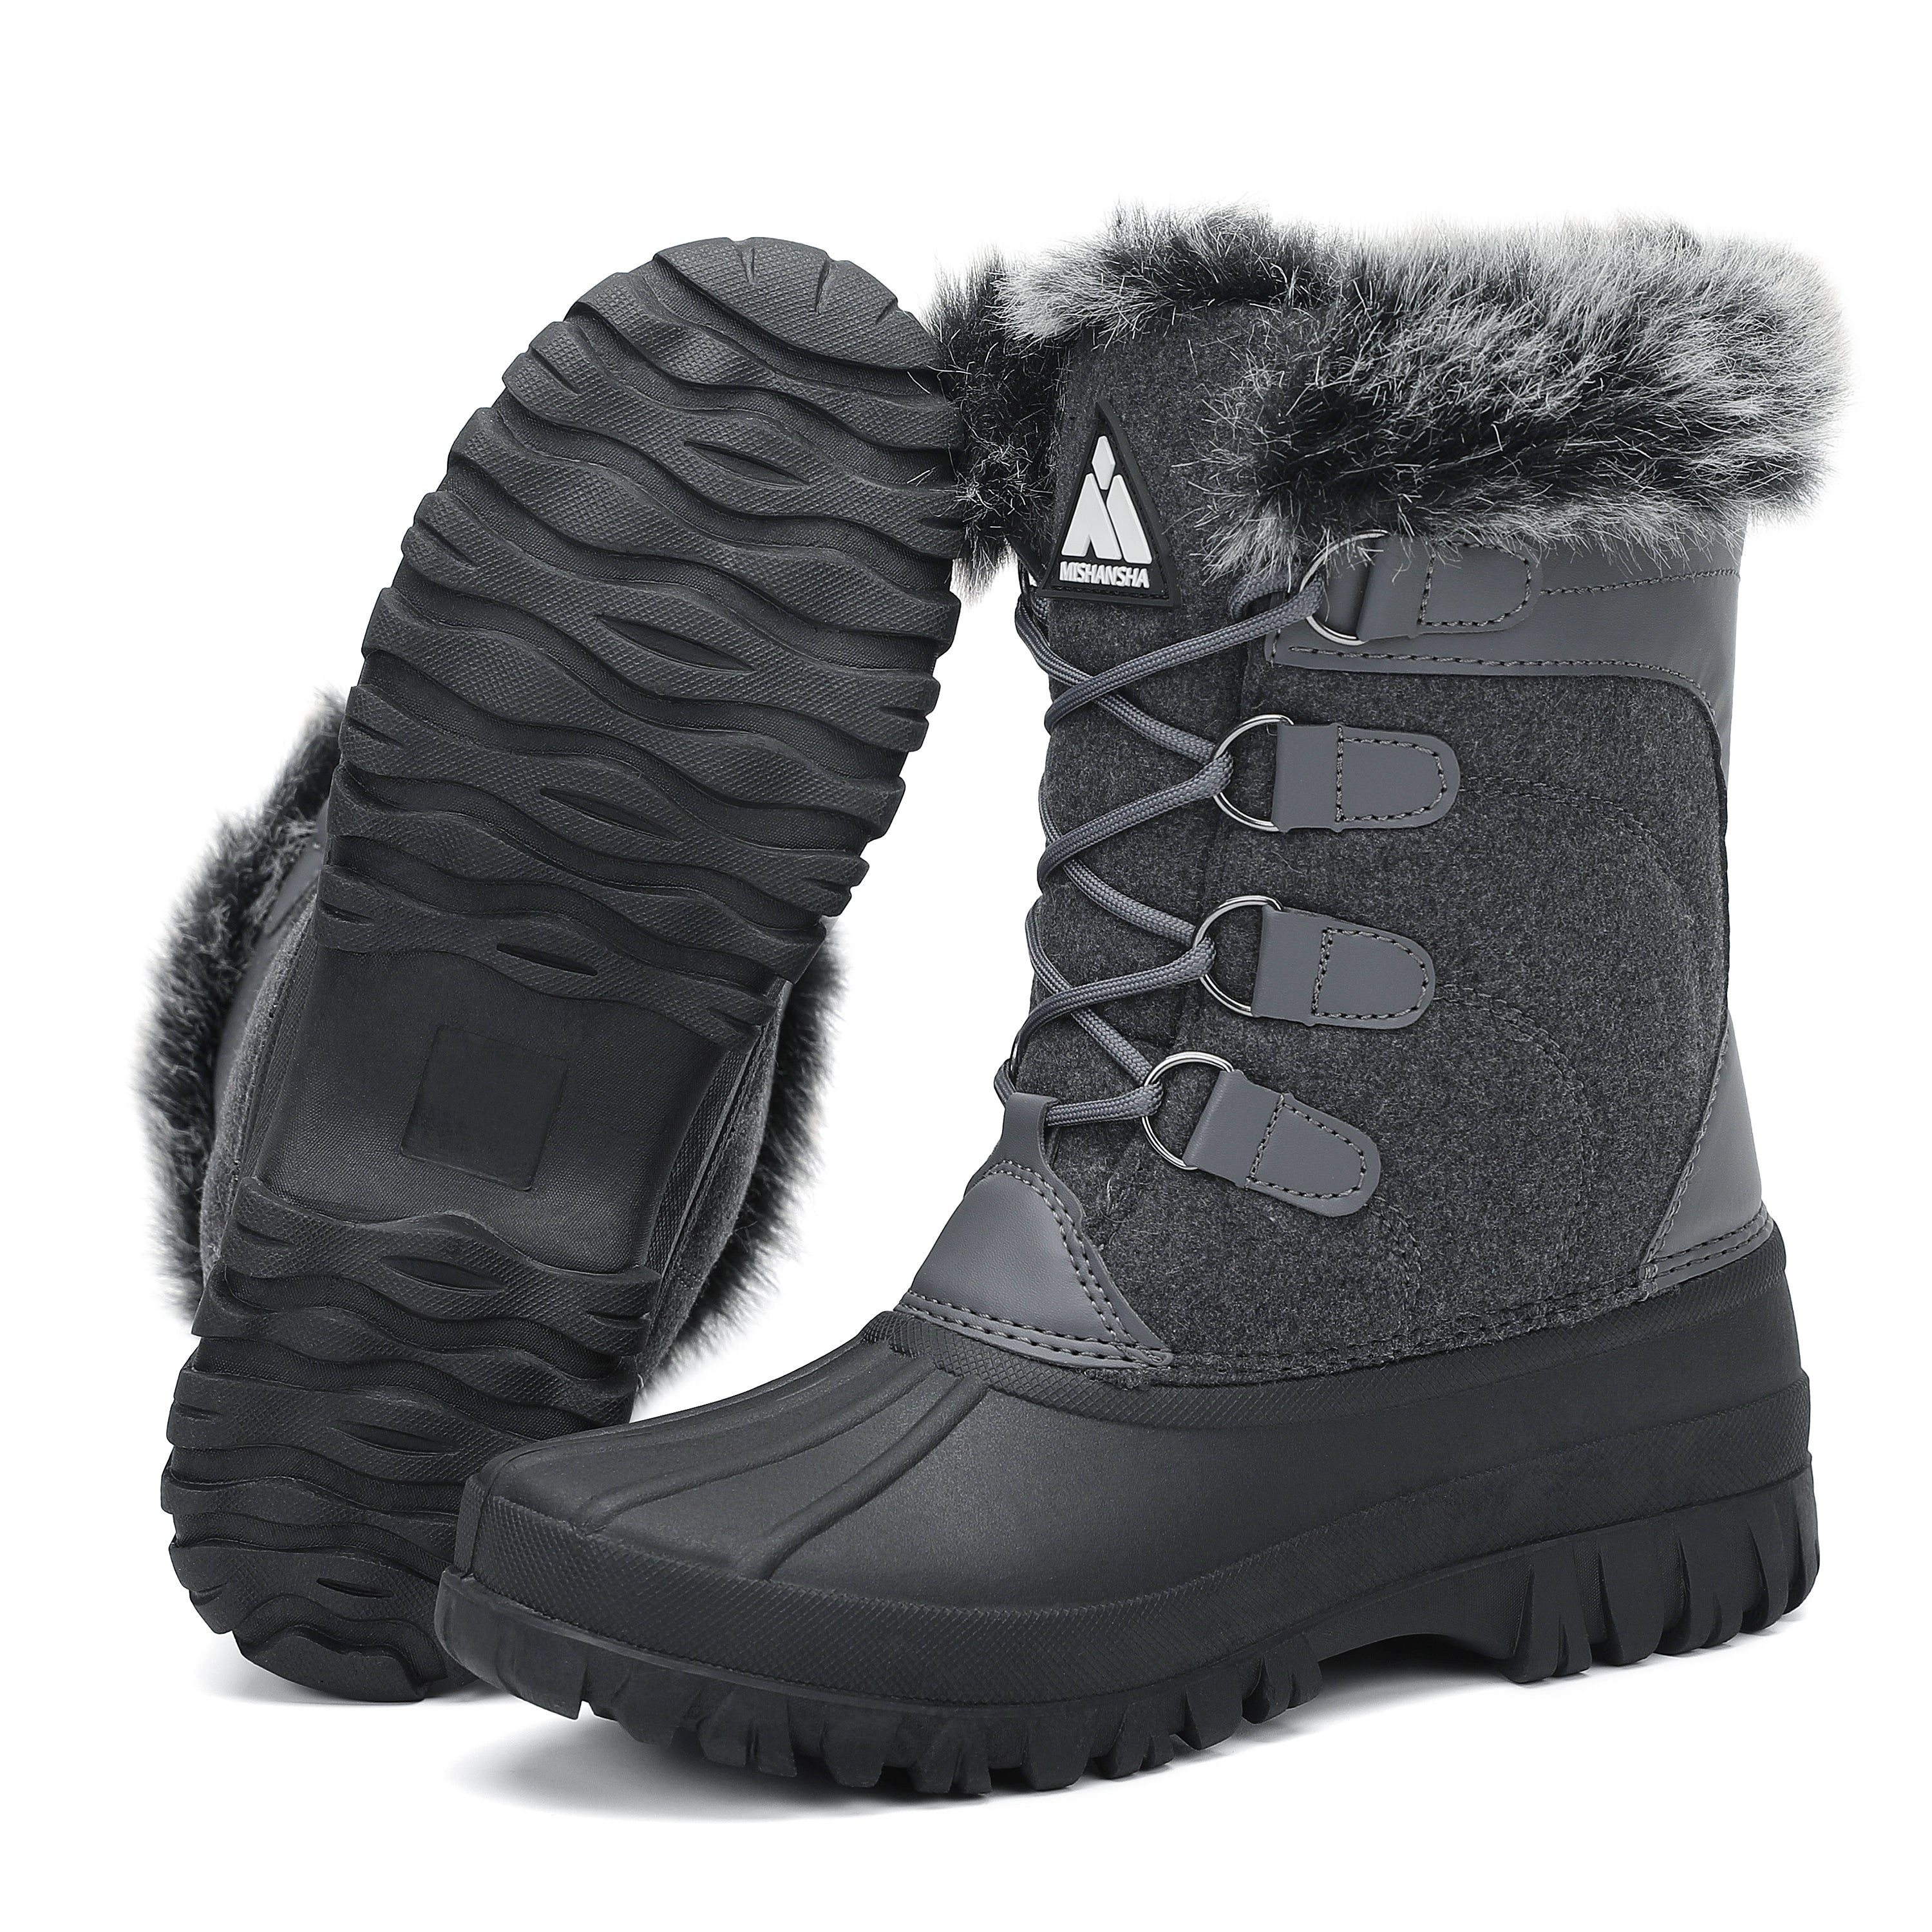 Mishansha Women's Snow Boots Outdoor Warm Mid-Calf Booties Anti-Skid Water Resistant Winter Shoes